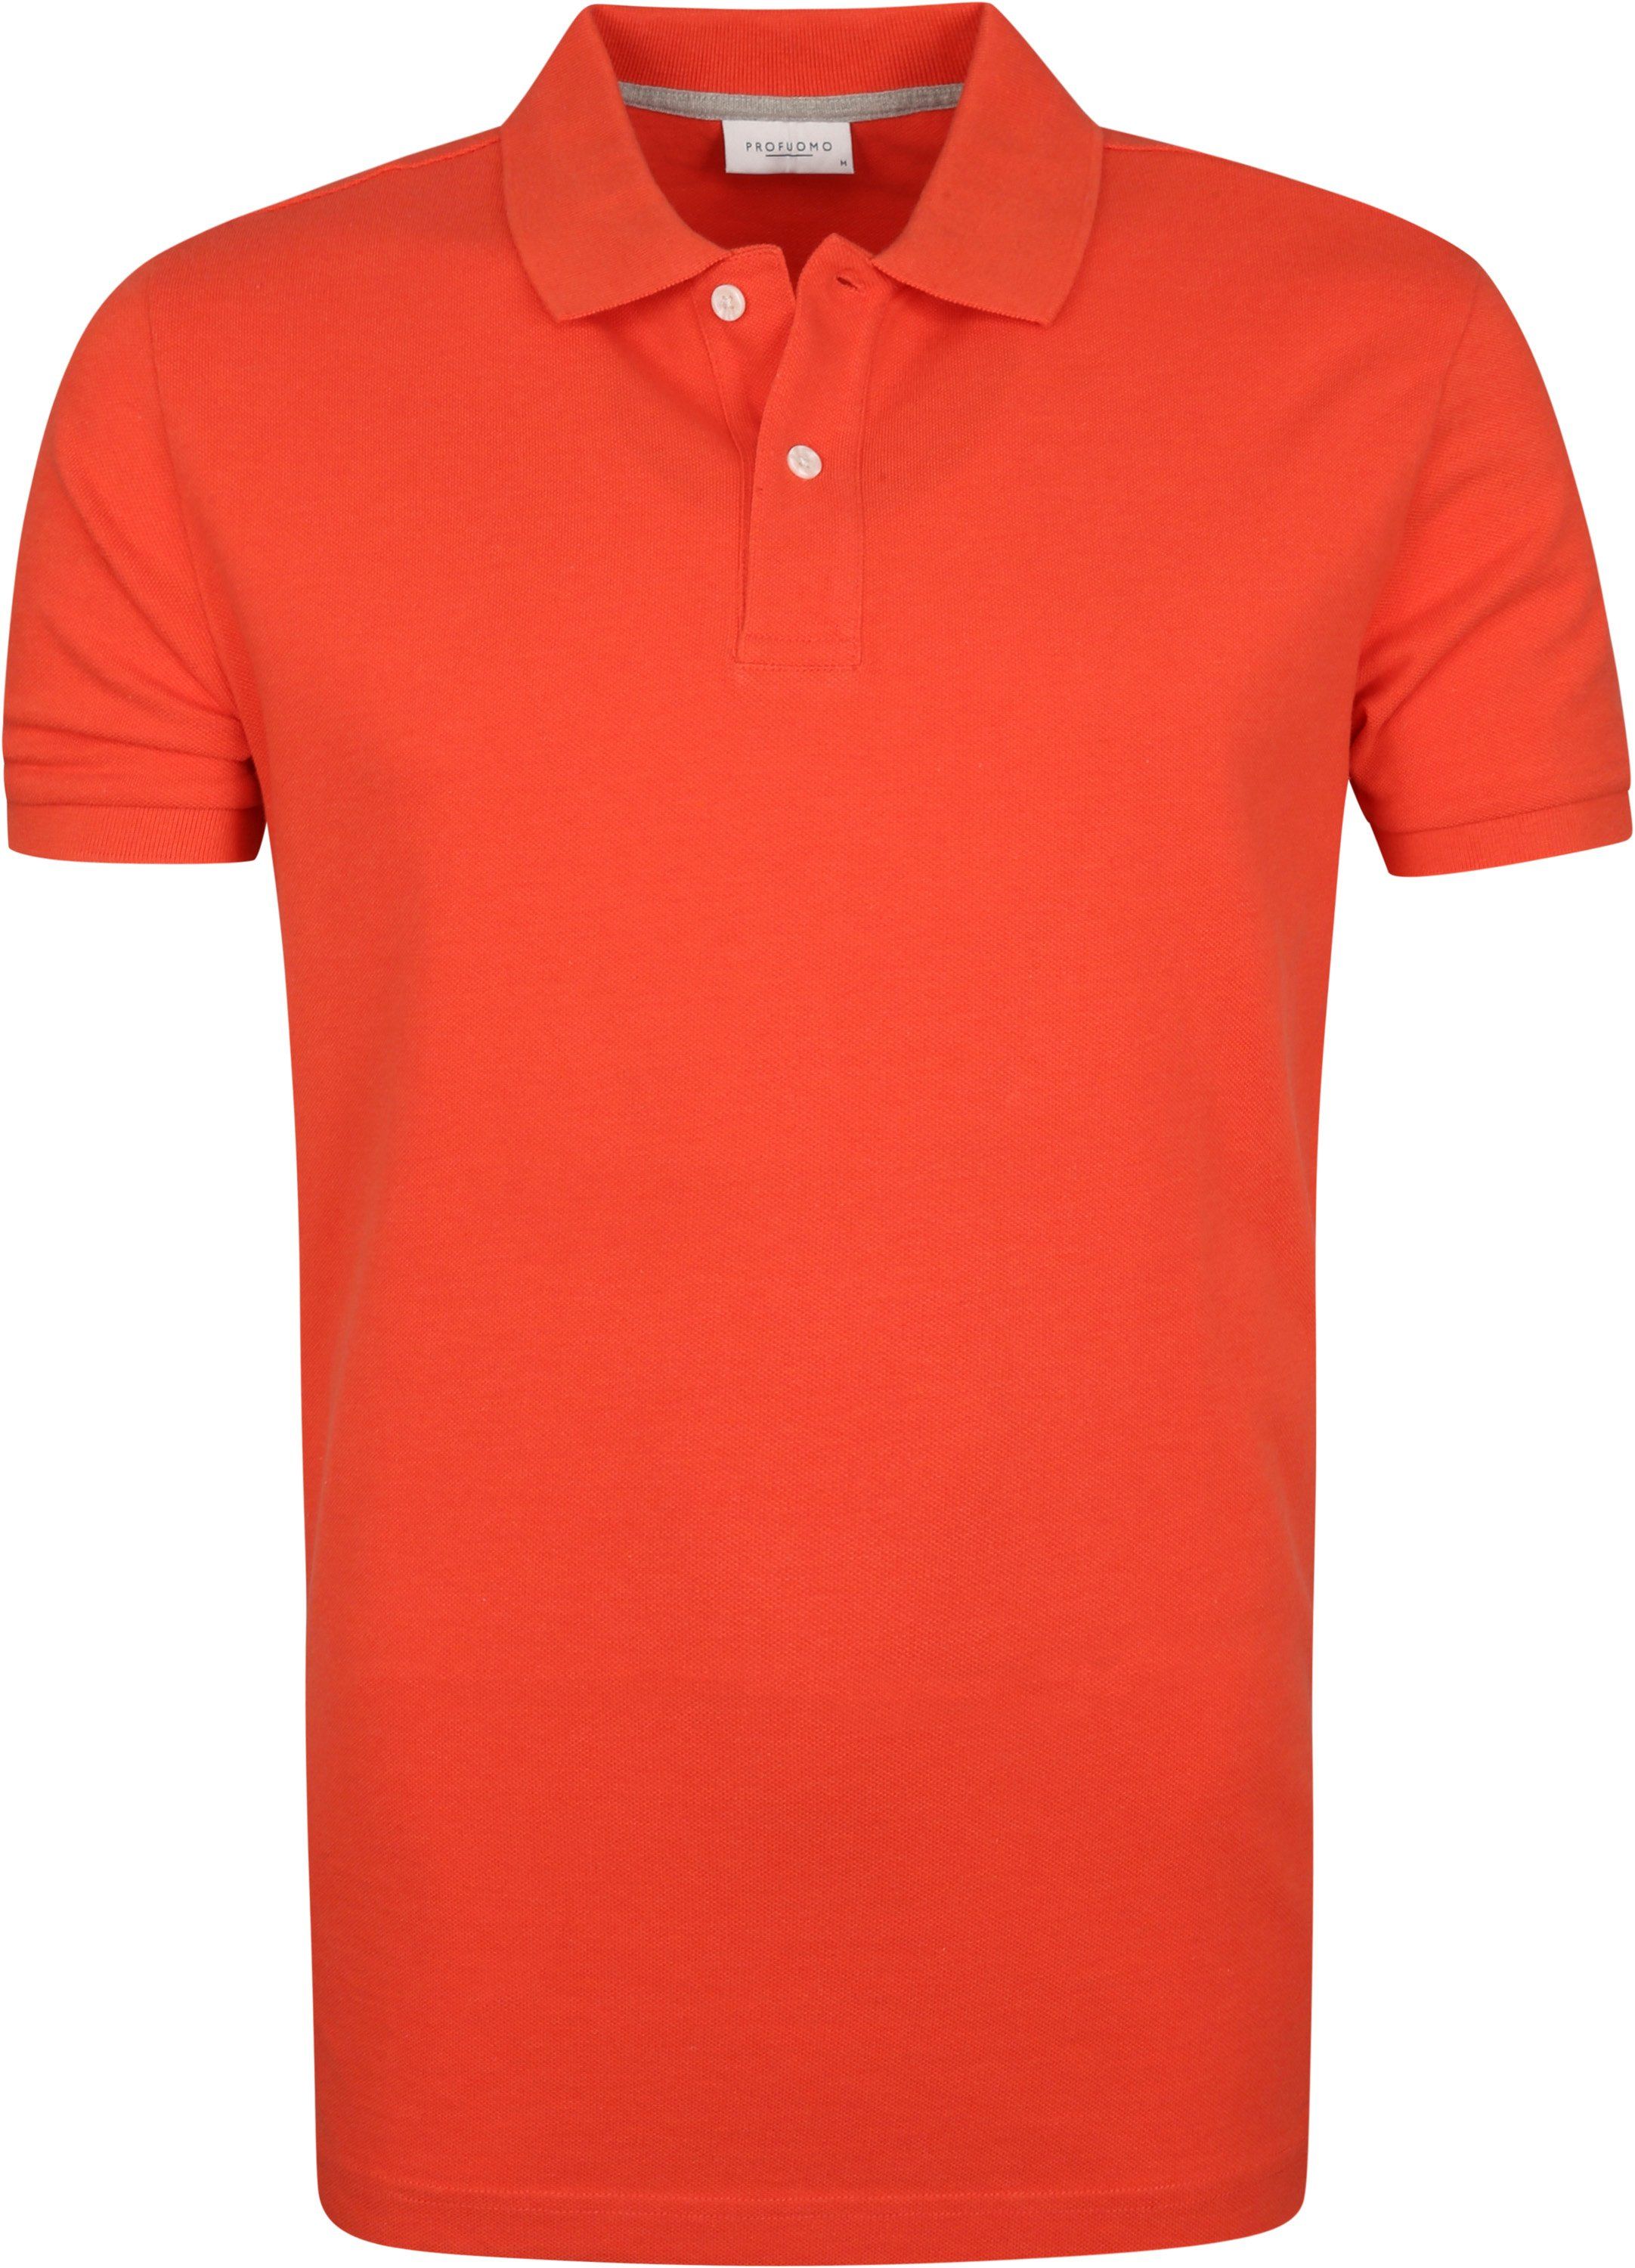 Profuomo Pique Polo Shirt Coral Red size L